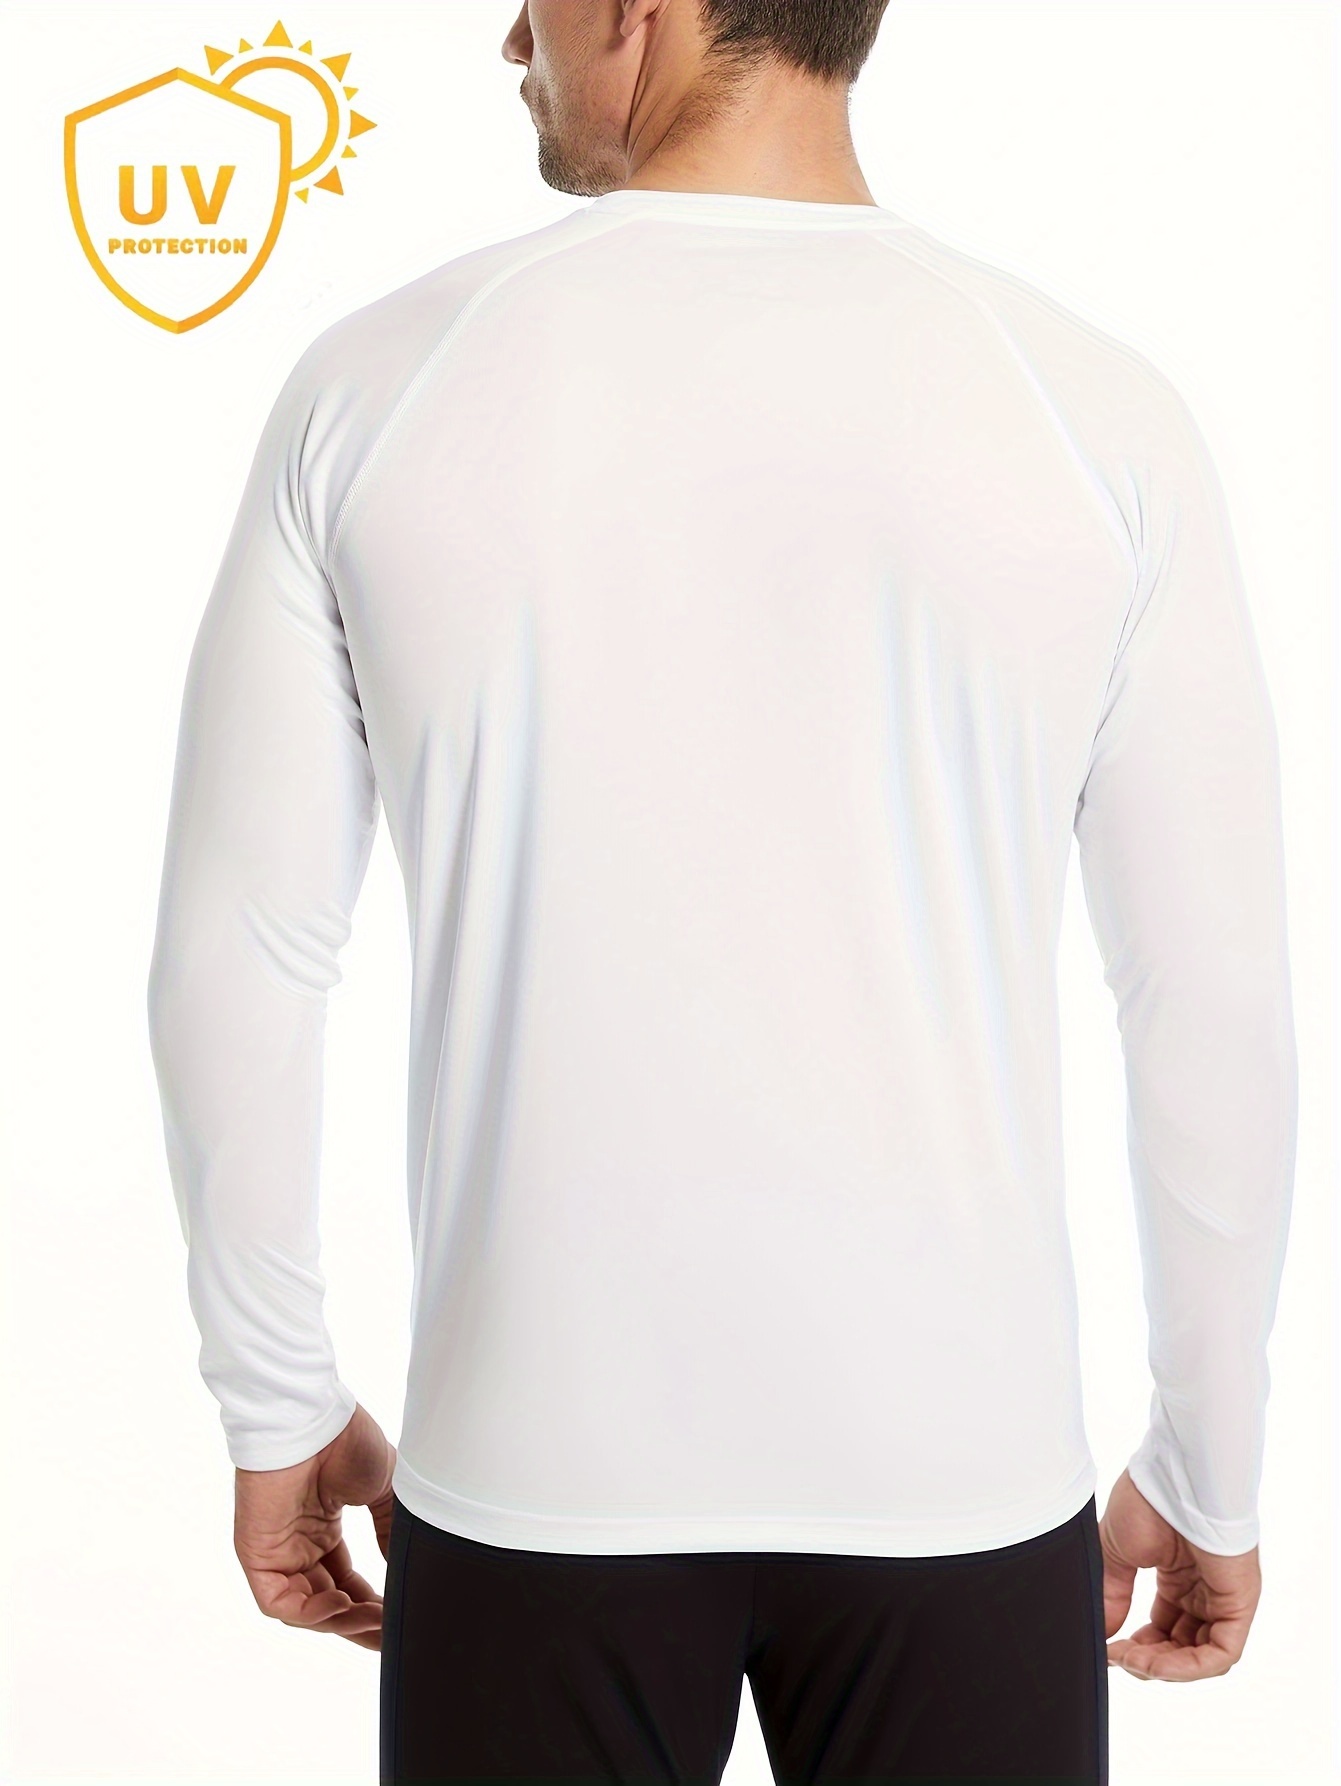 Sun-Daze Long Sleeve Sun Shirt with UPF50 Protection